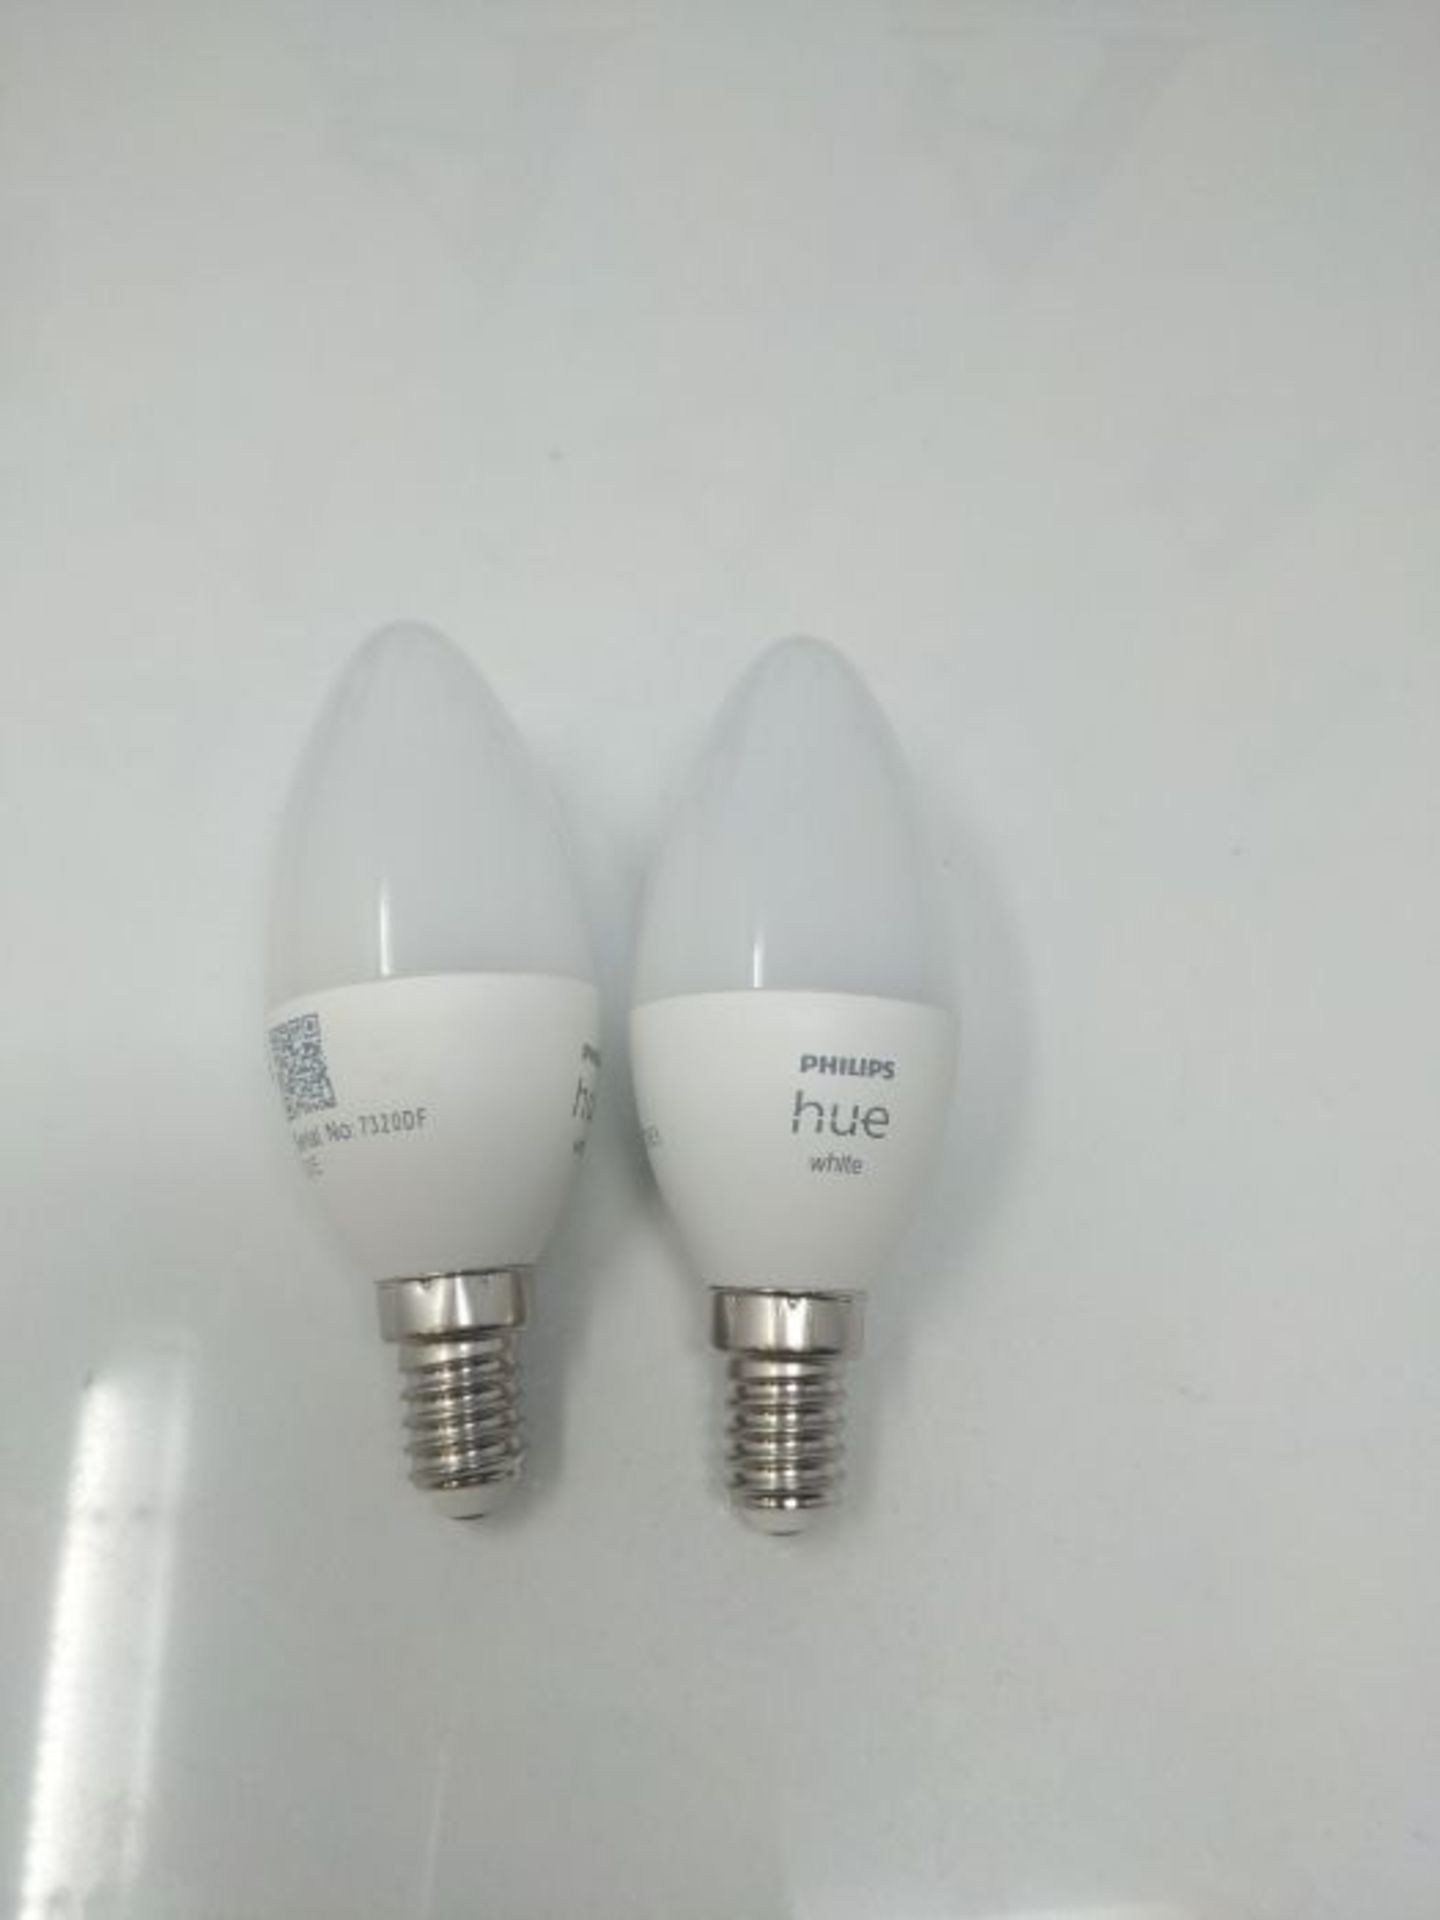 Philips Hue White E14 LED Lampe Doppelpack, dimmbar, warmweiÃxes Licht, steuerbar vi - Image 3 of 3